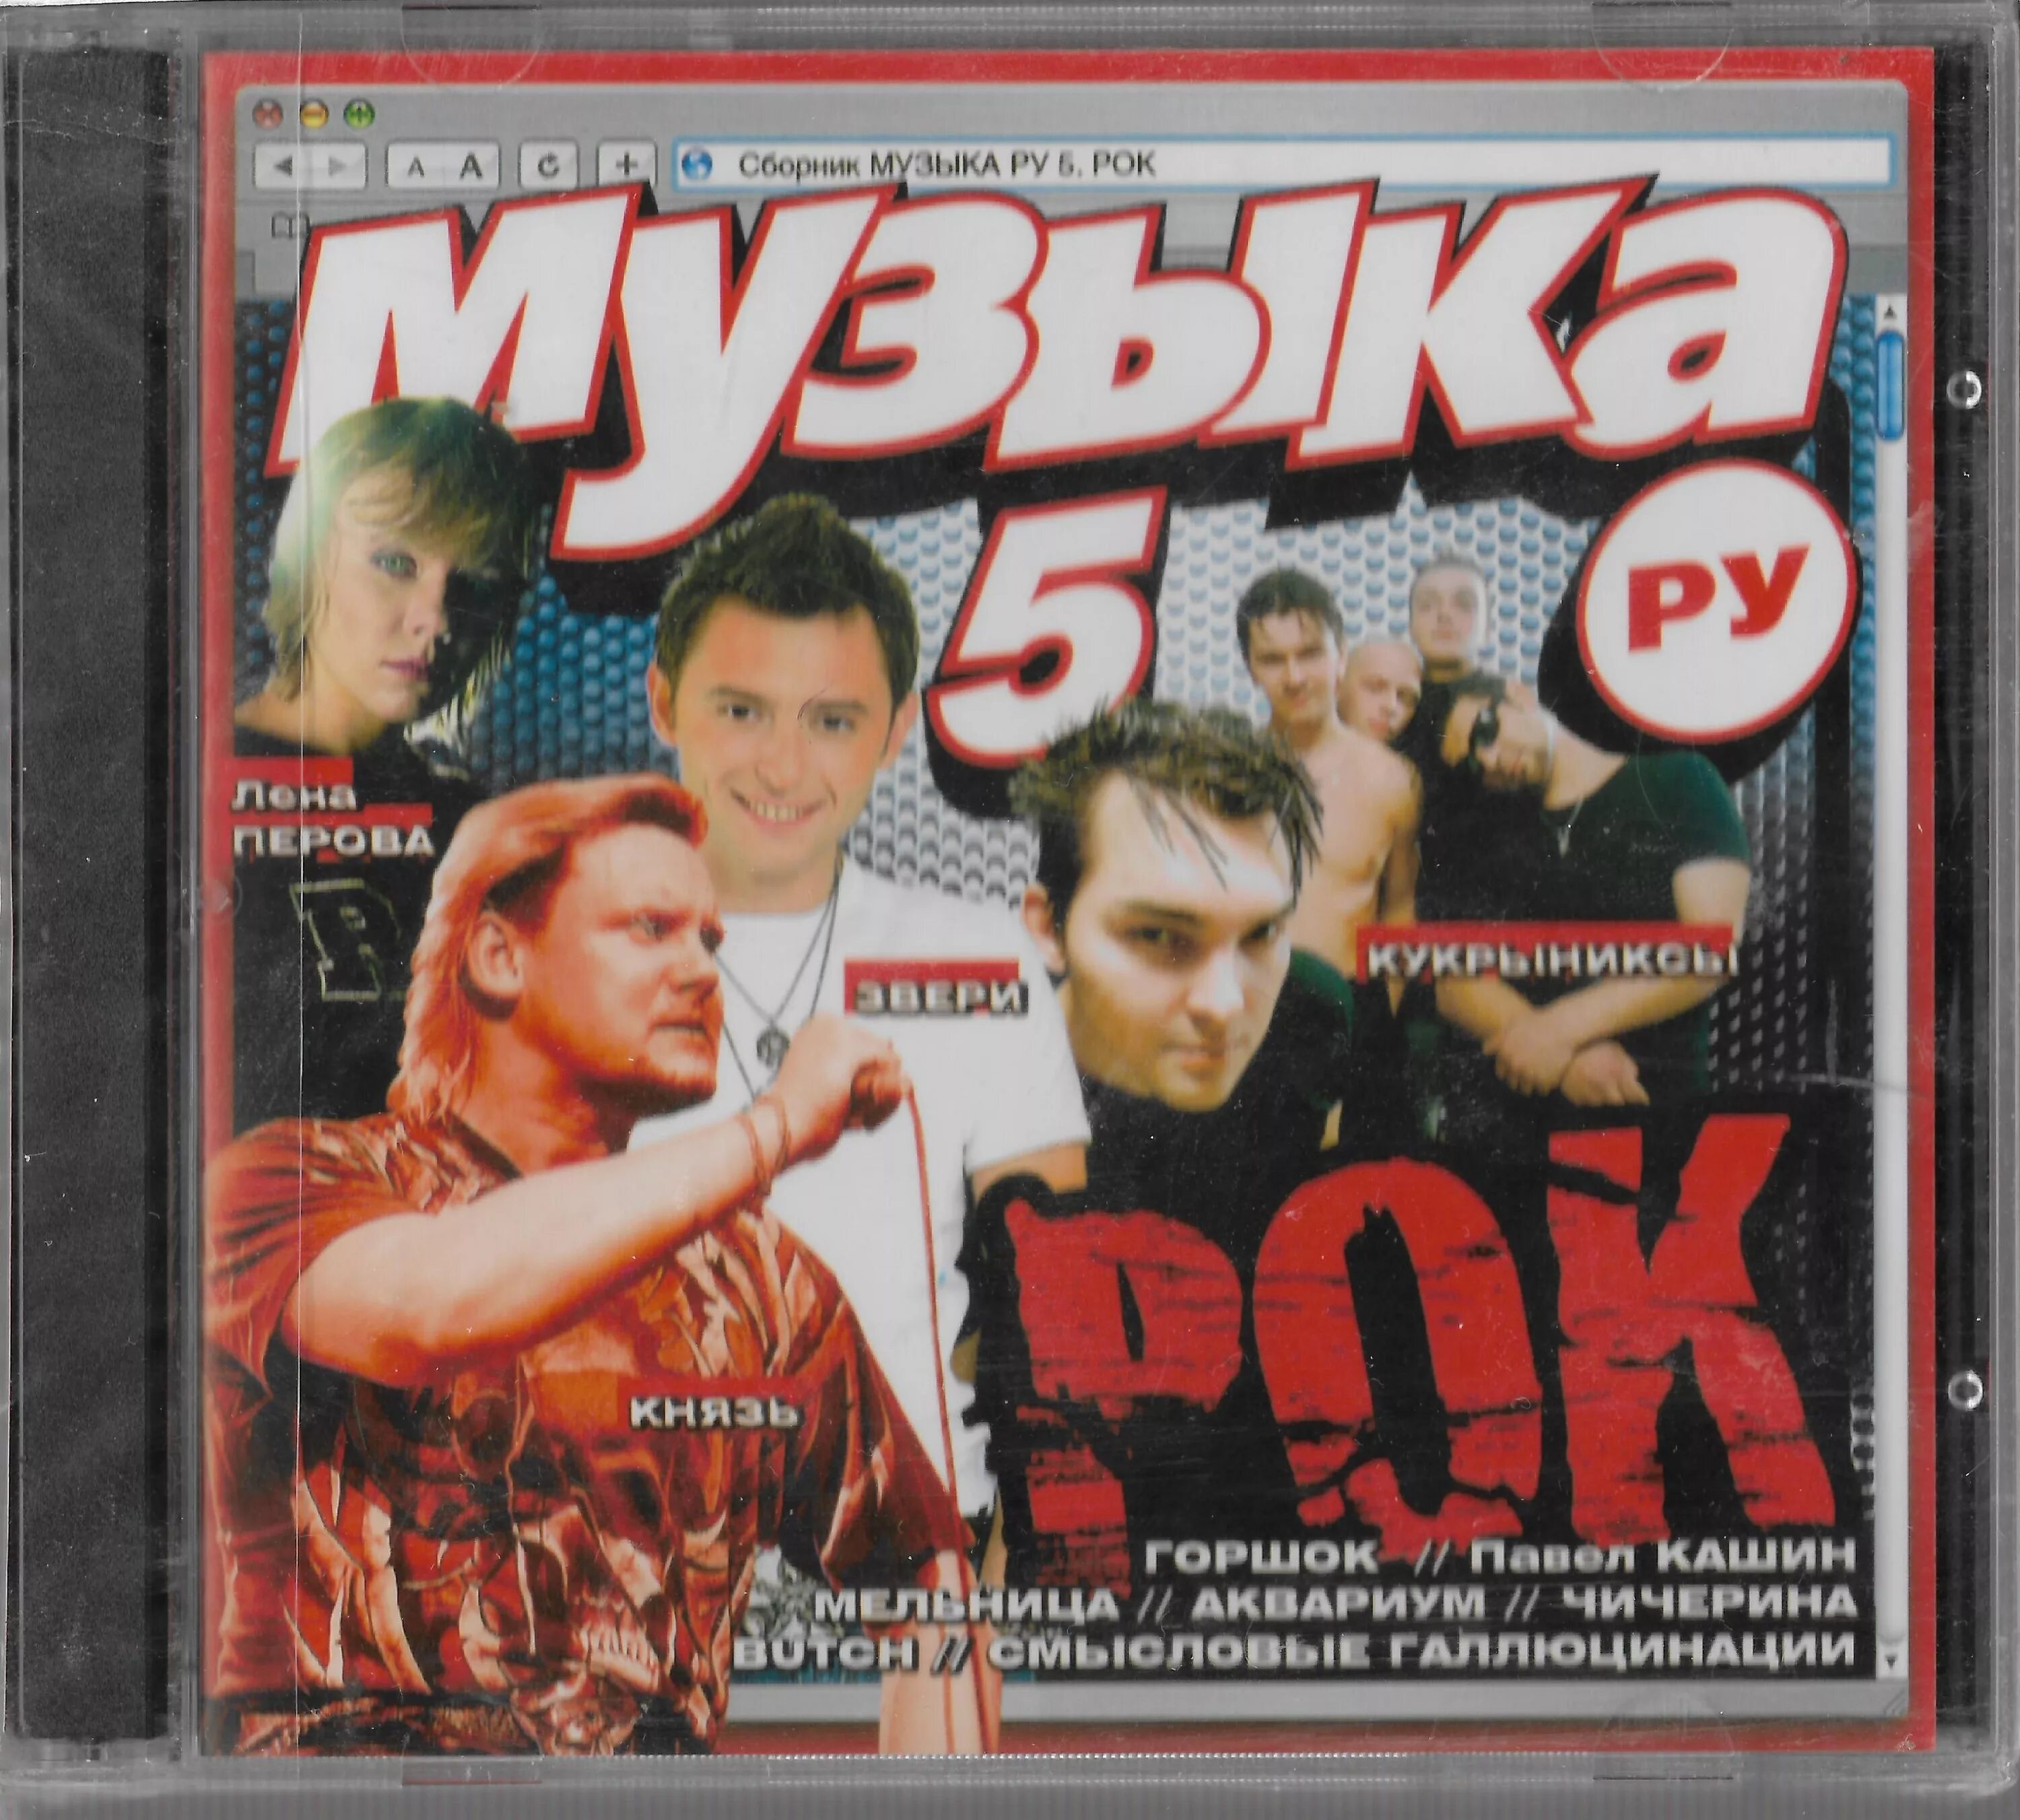 Ru music песни. Сборник 2005 CD. Сборник рок музыки. Рок диски сборники. Музыкальный сборник.